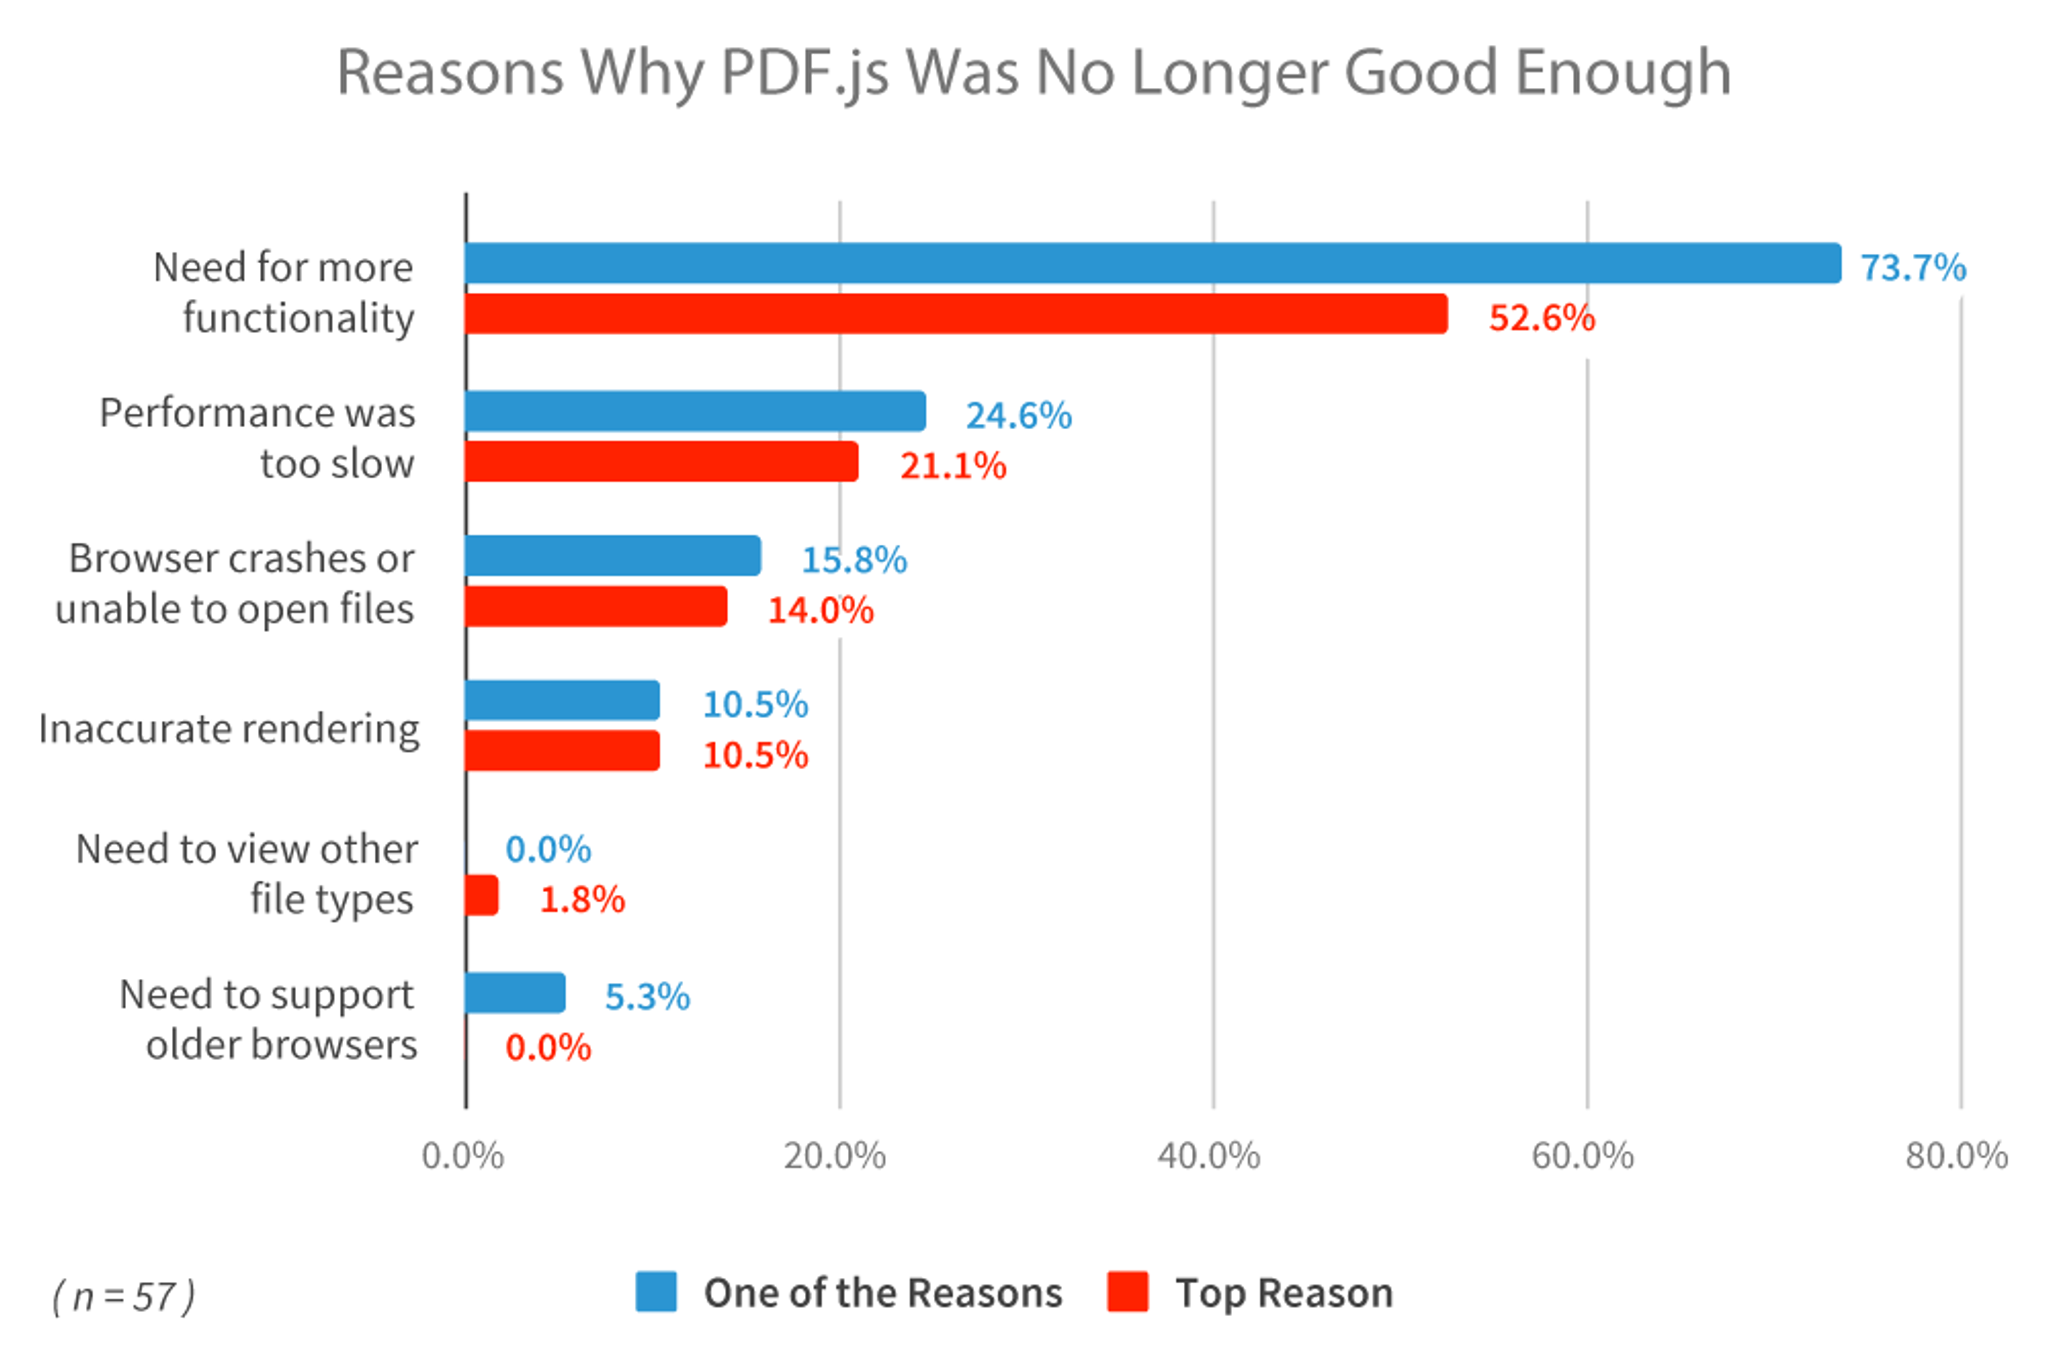 Reasons why pdf.js was no longer good enough